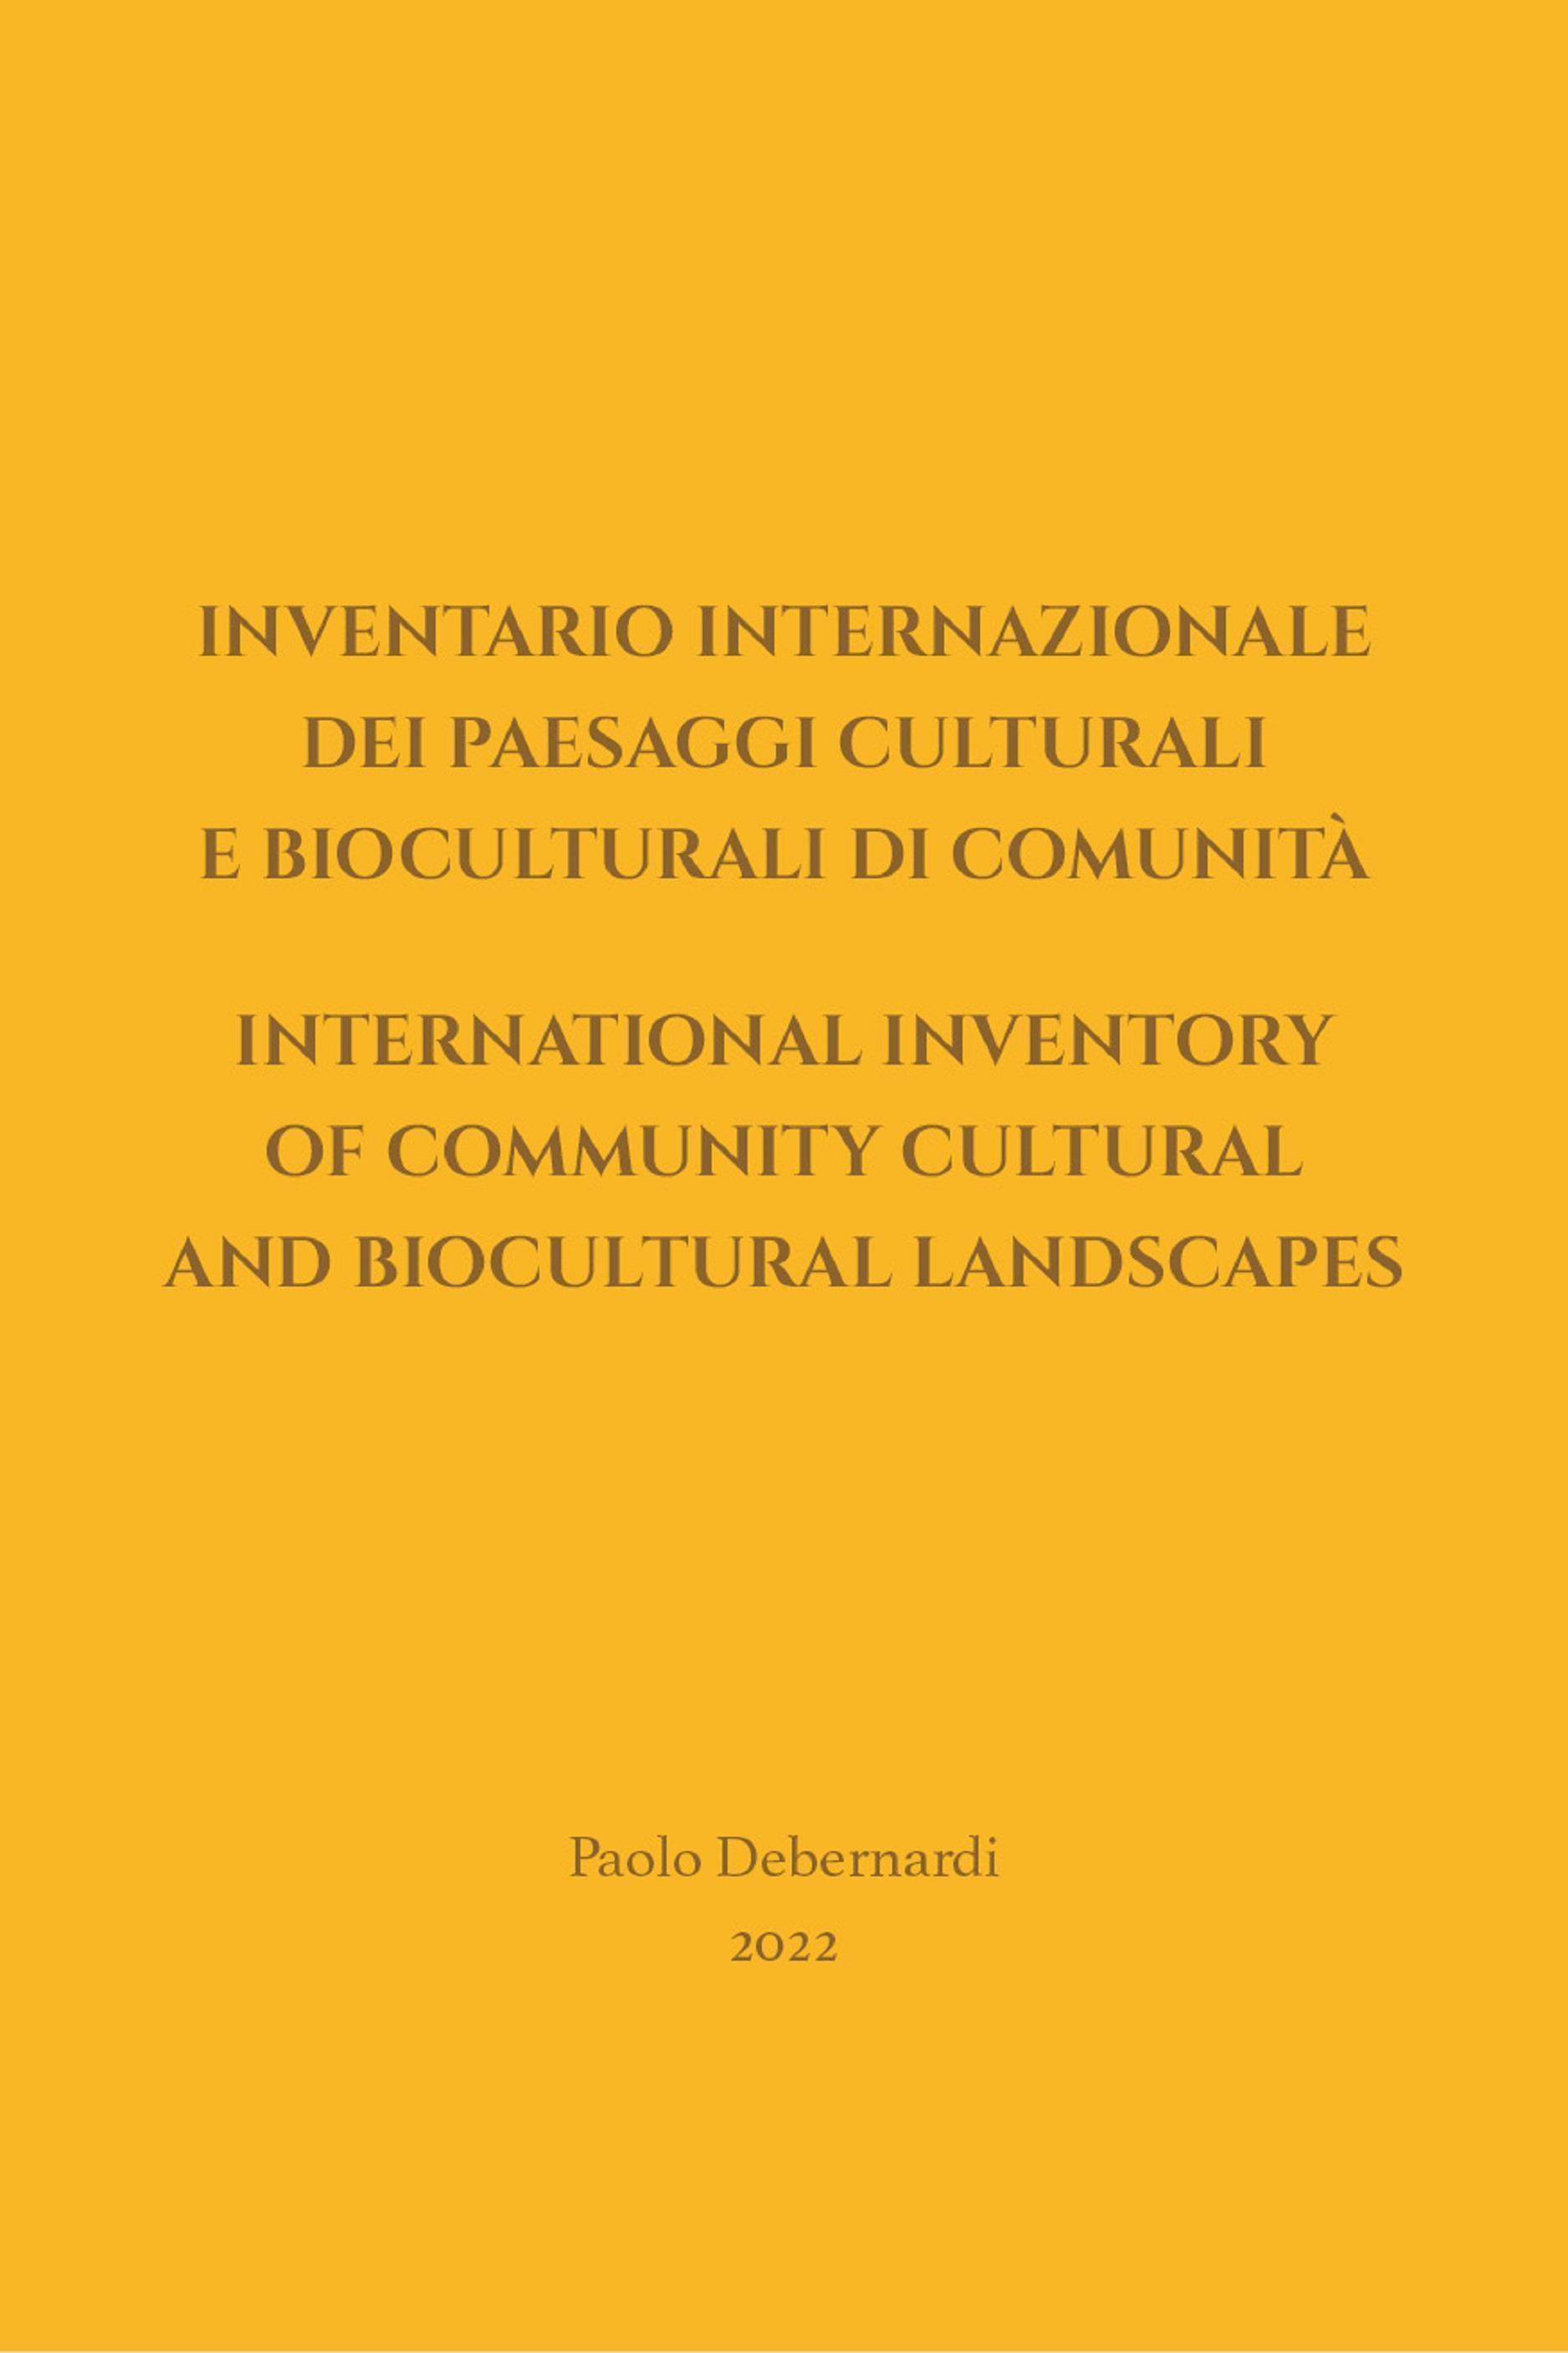 Inventario Internazionale dei paesaggi culturali e bioculturali di comunità